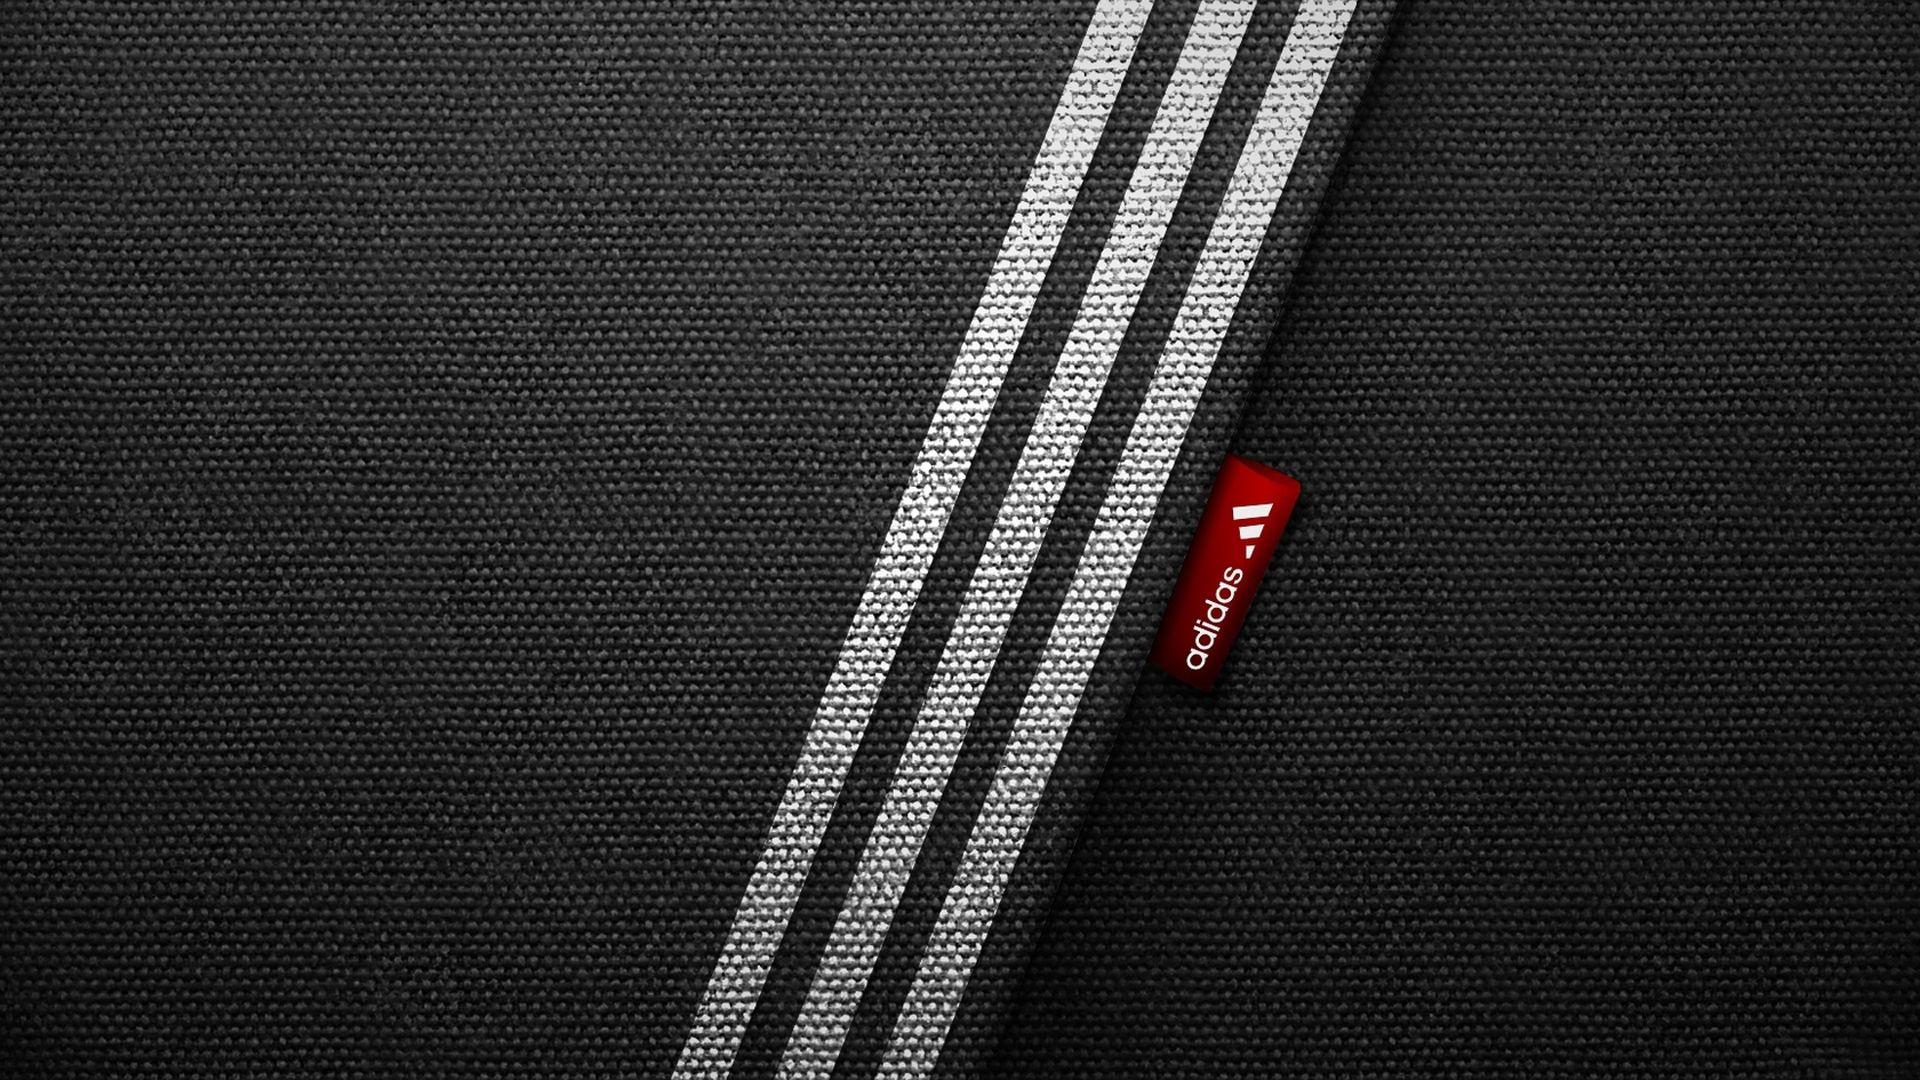 Download wallpaper 1920x1080 adidas, brand, logo, sports, minimalism